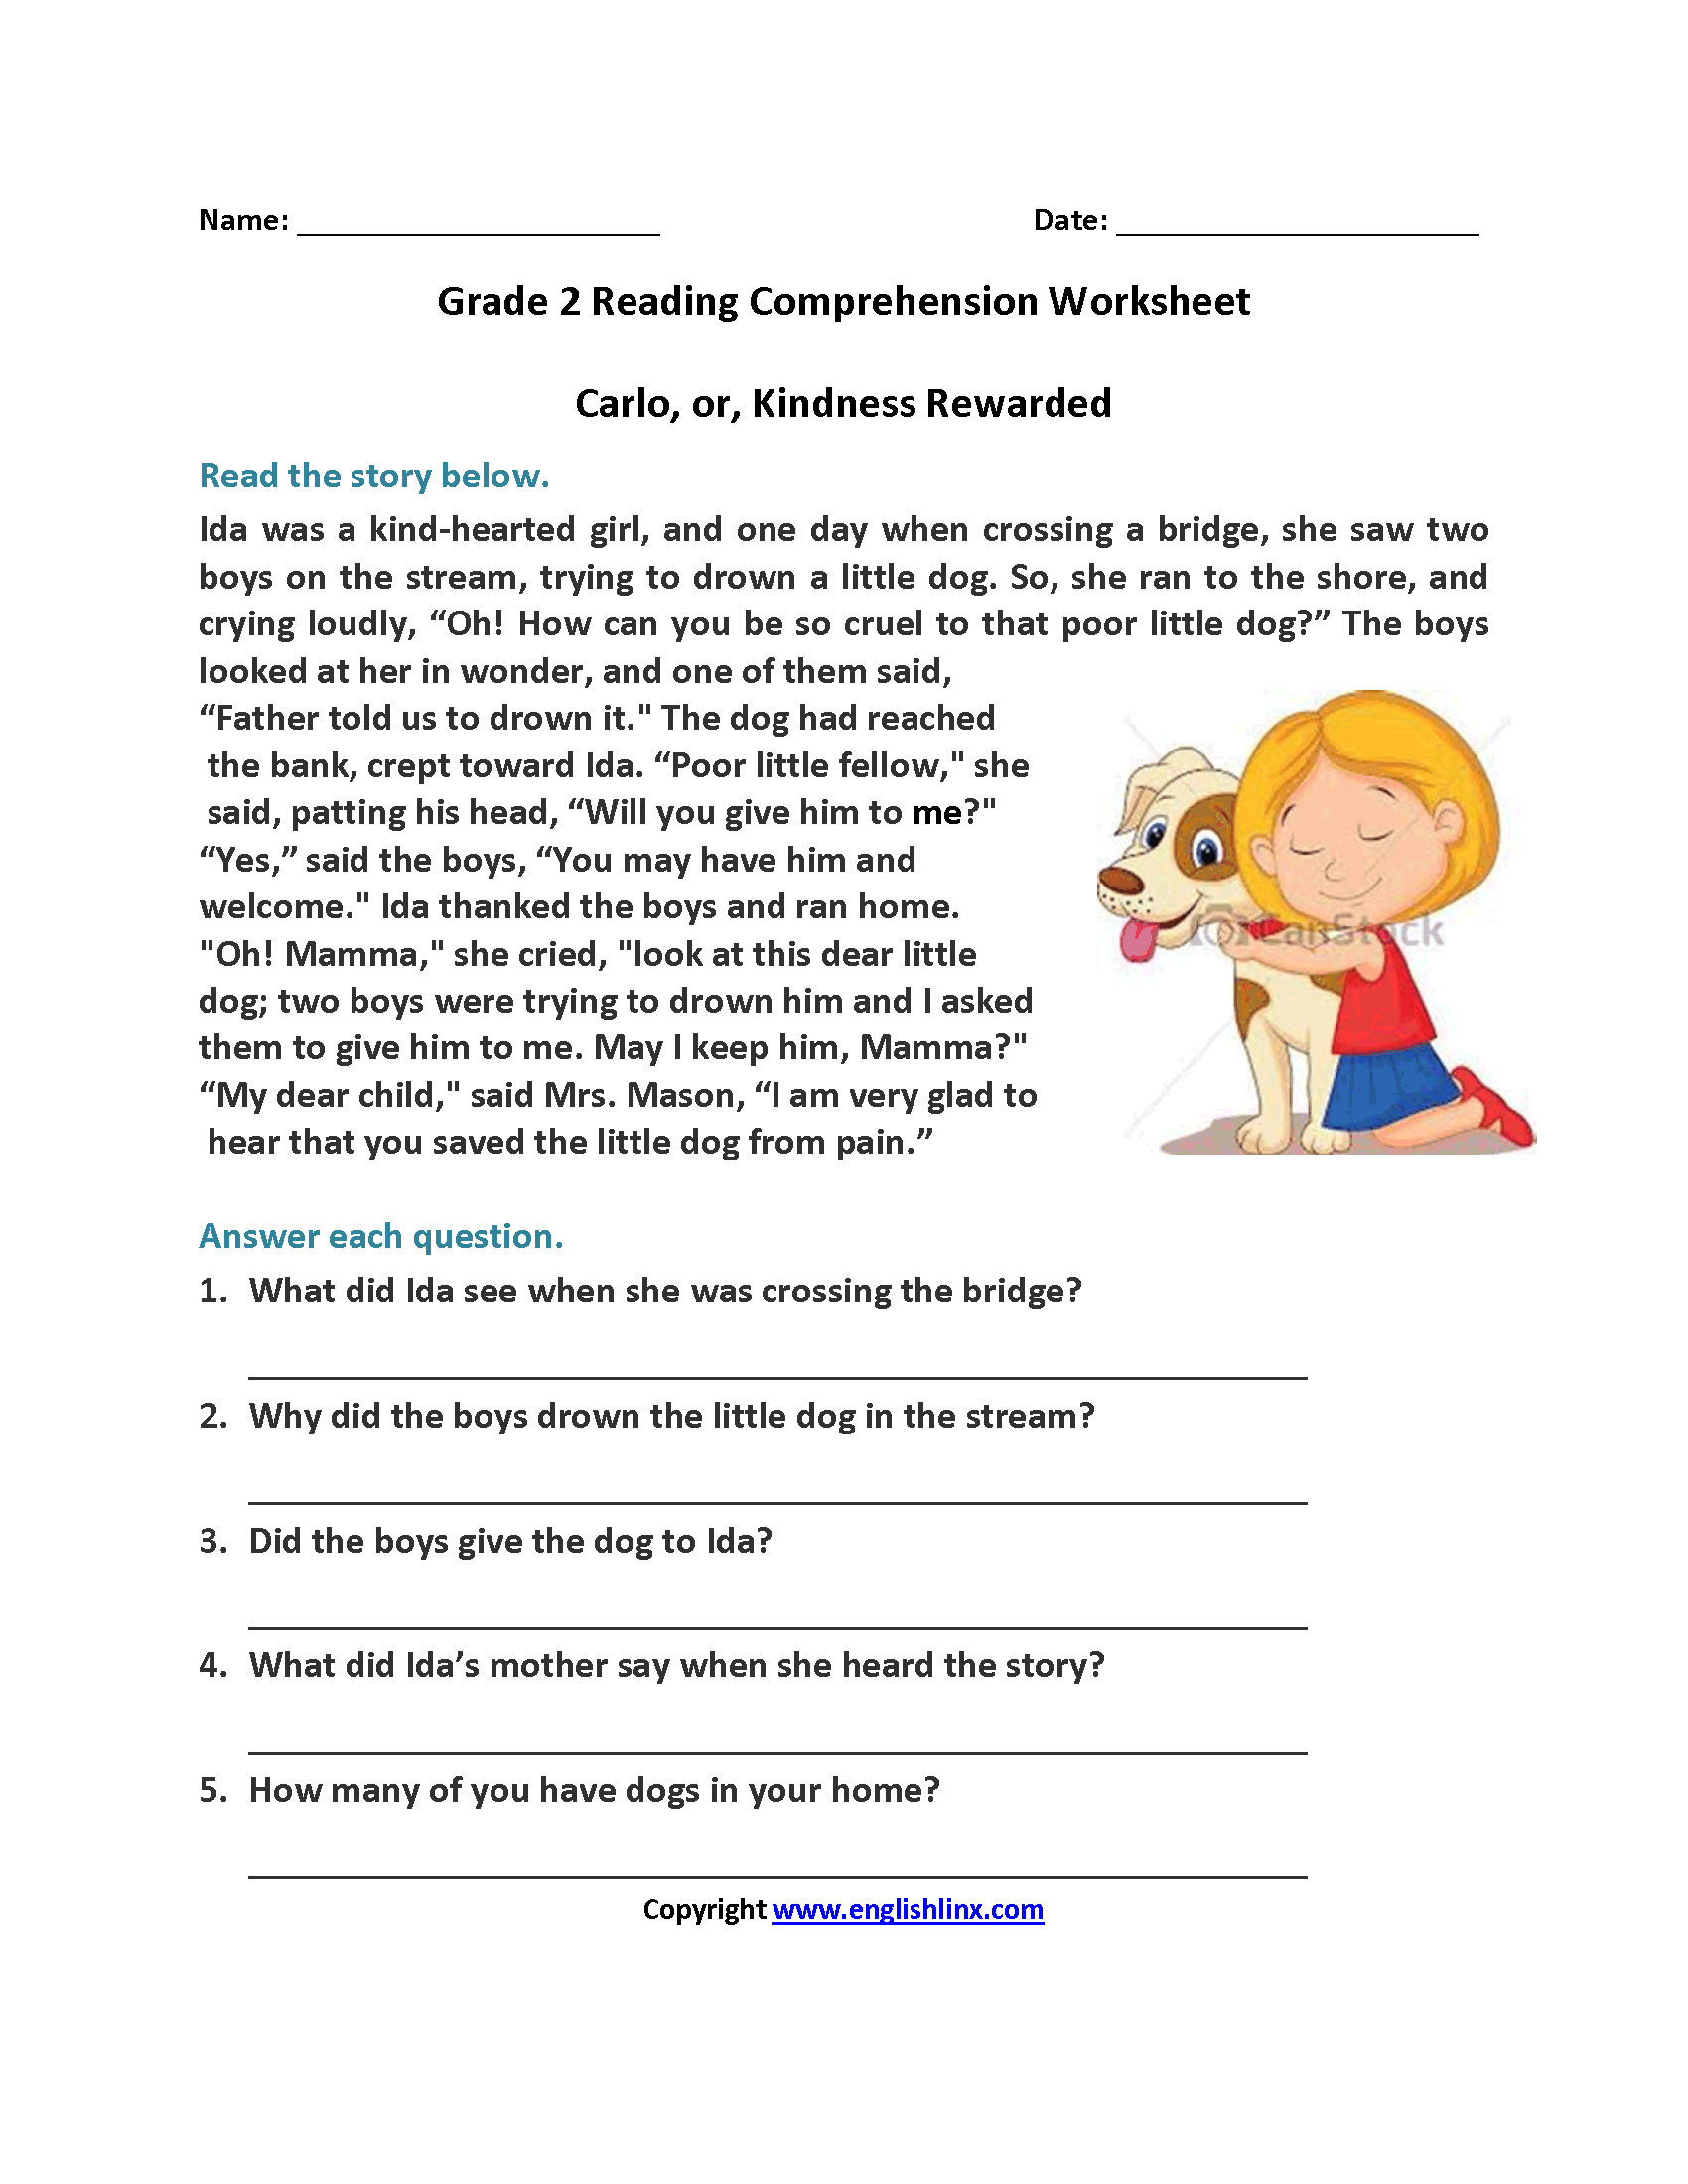 Carlo Or Kindness Rewarded Second Grade Reading Worksheets | Reading - Free Printable Reading Comprehension Worksheets Grade 5